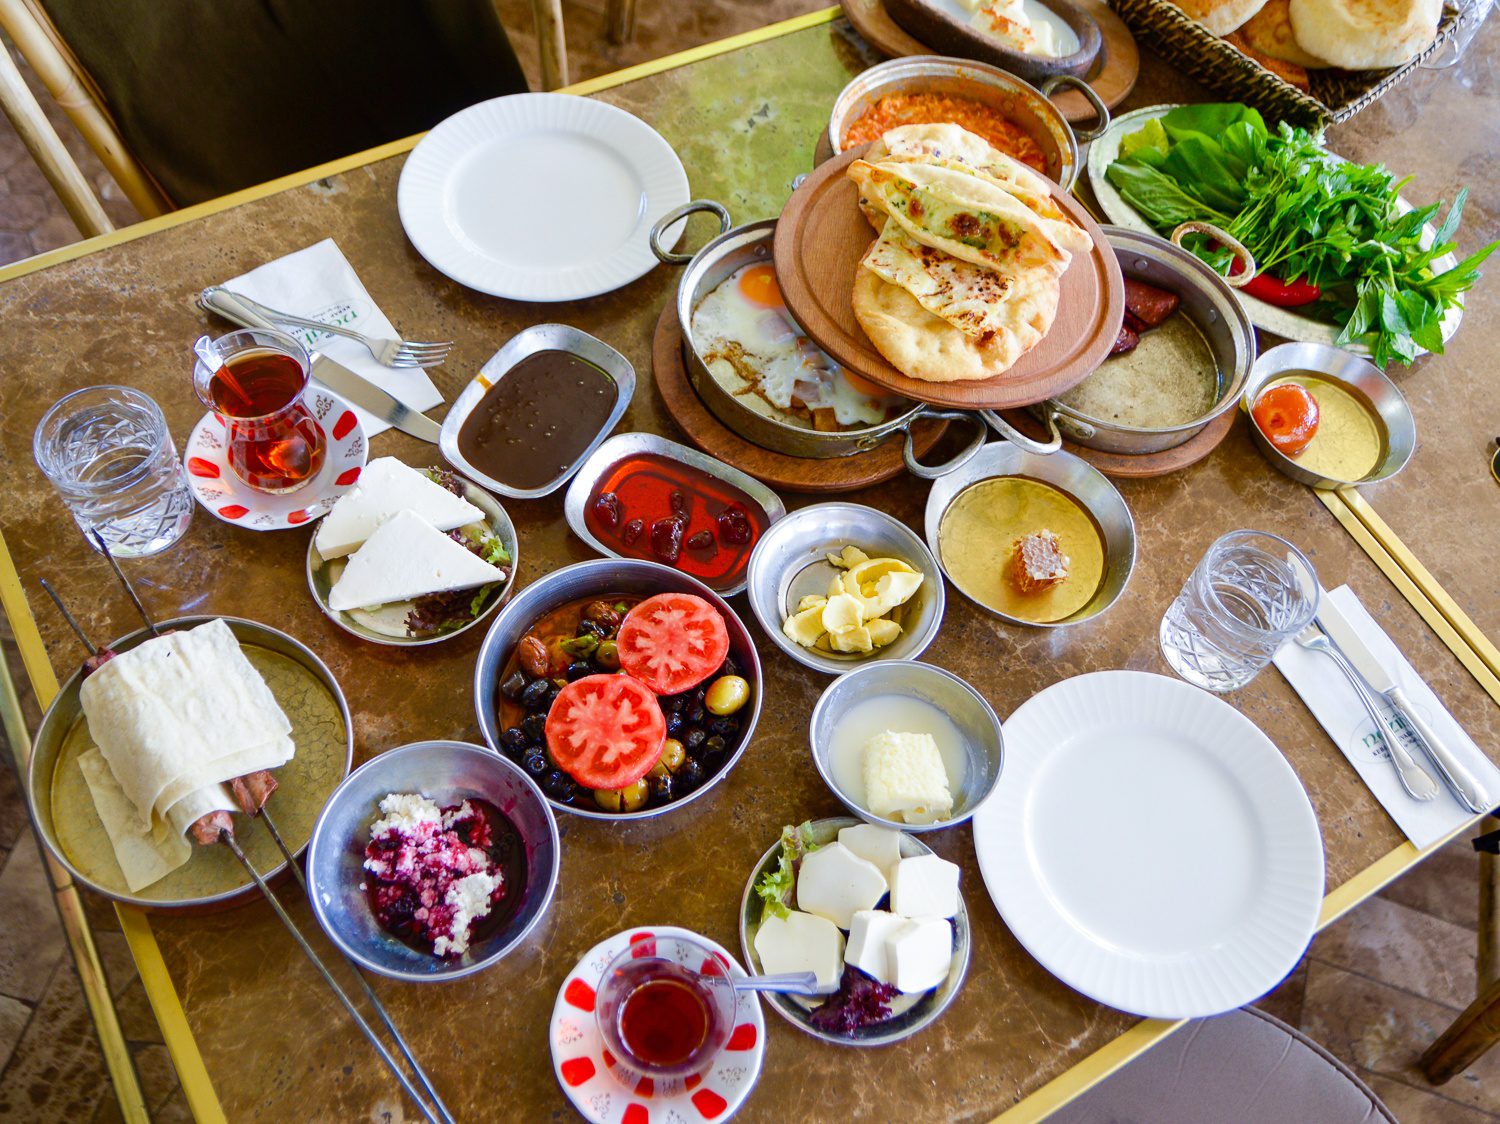 Turkish breakfast: Chris's favorite!